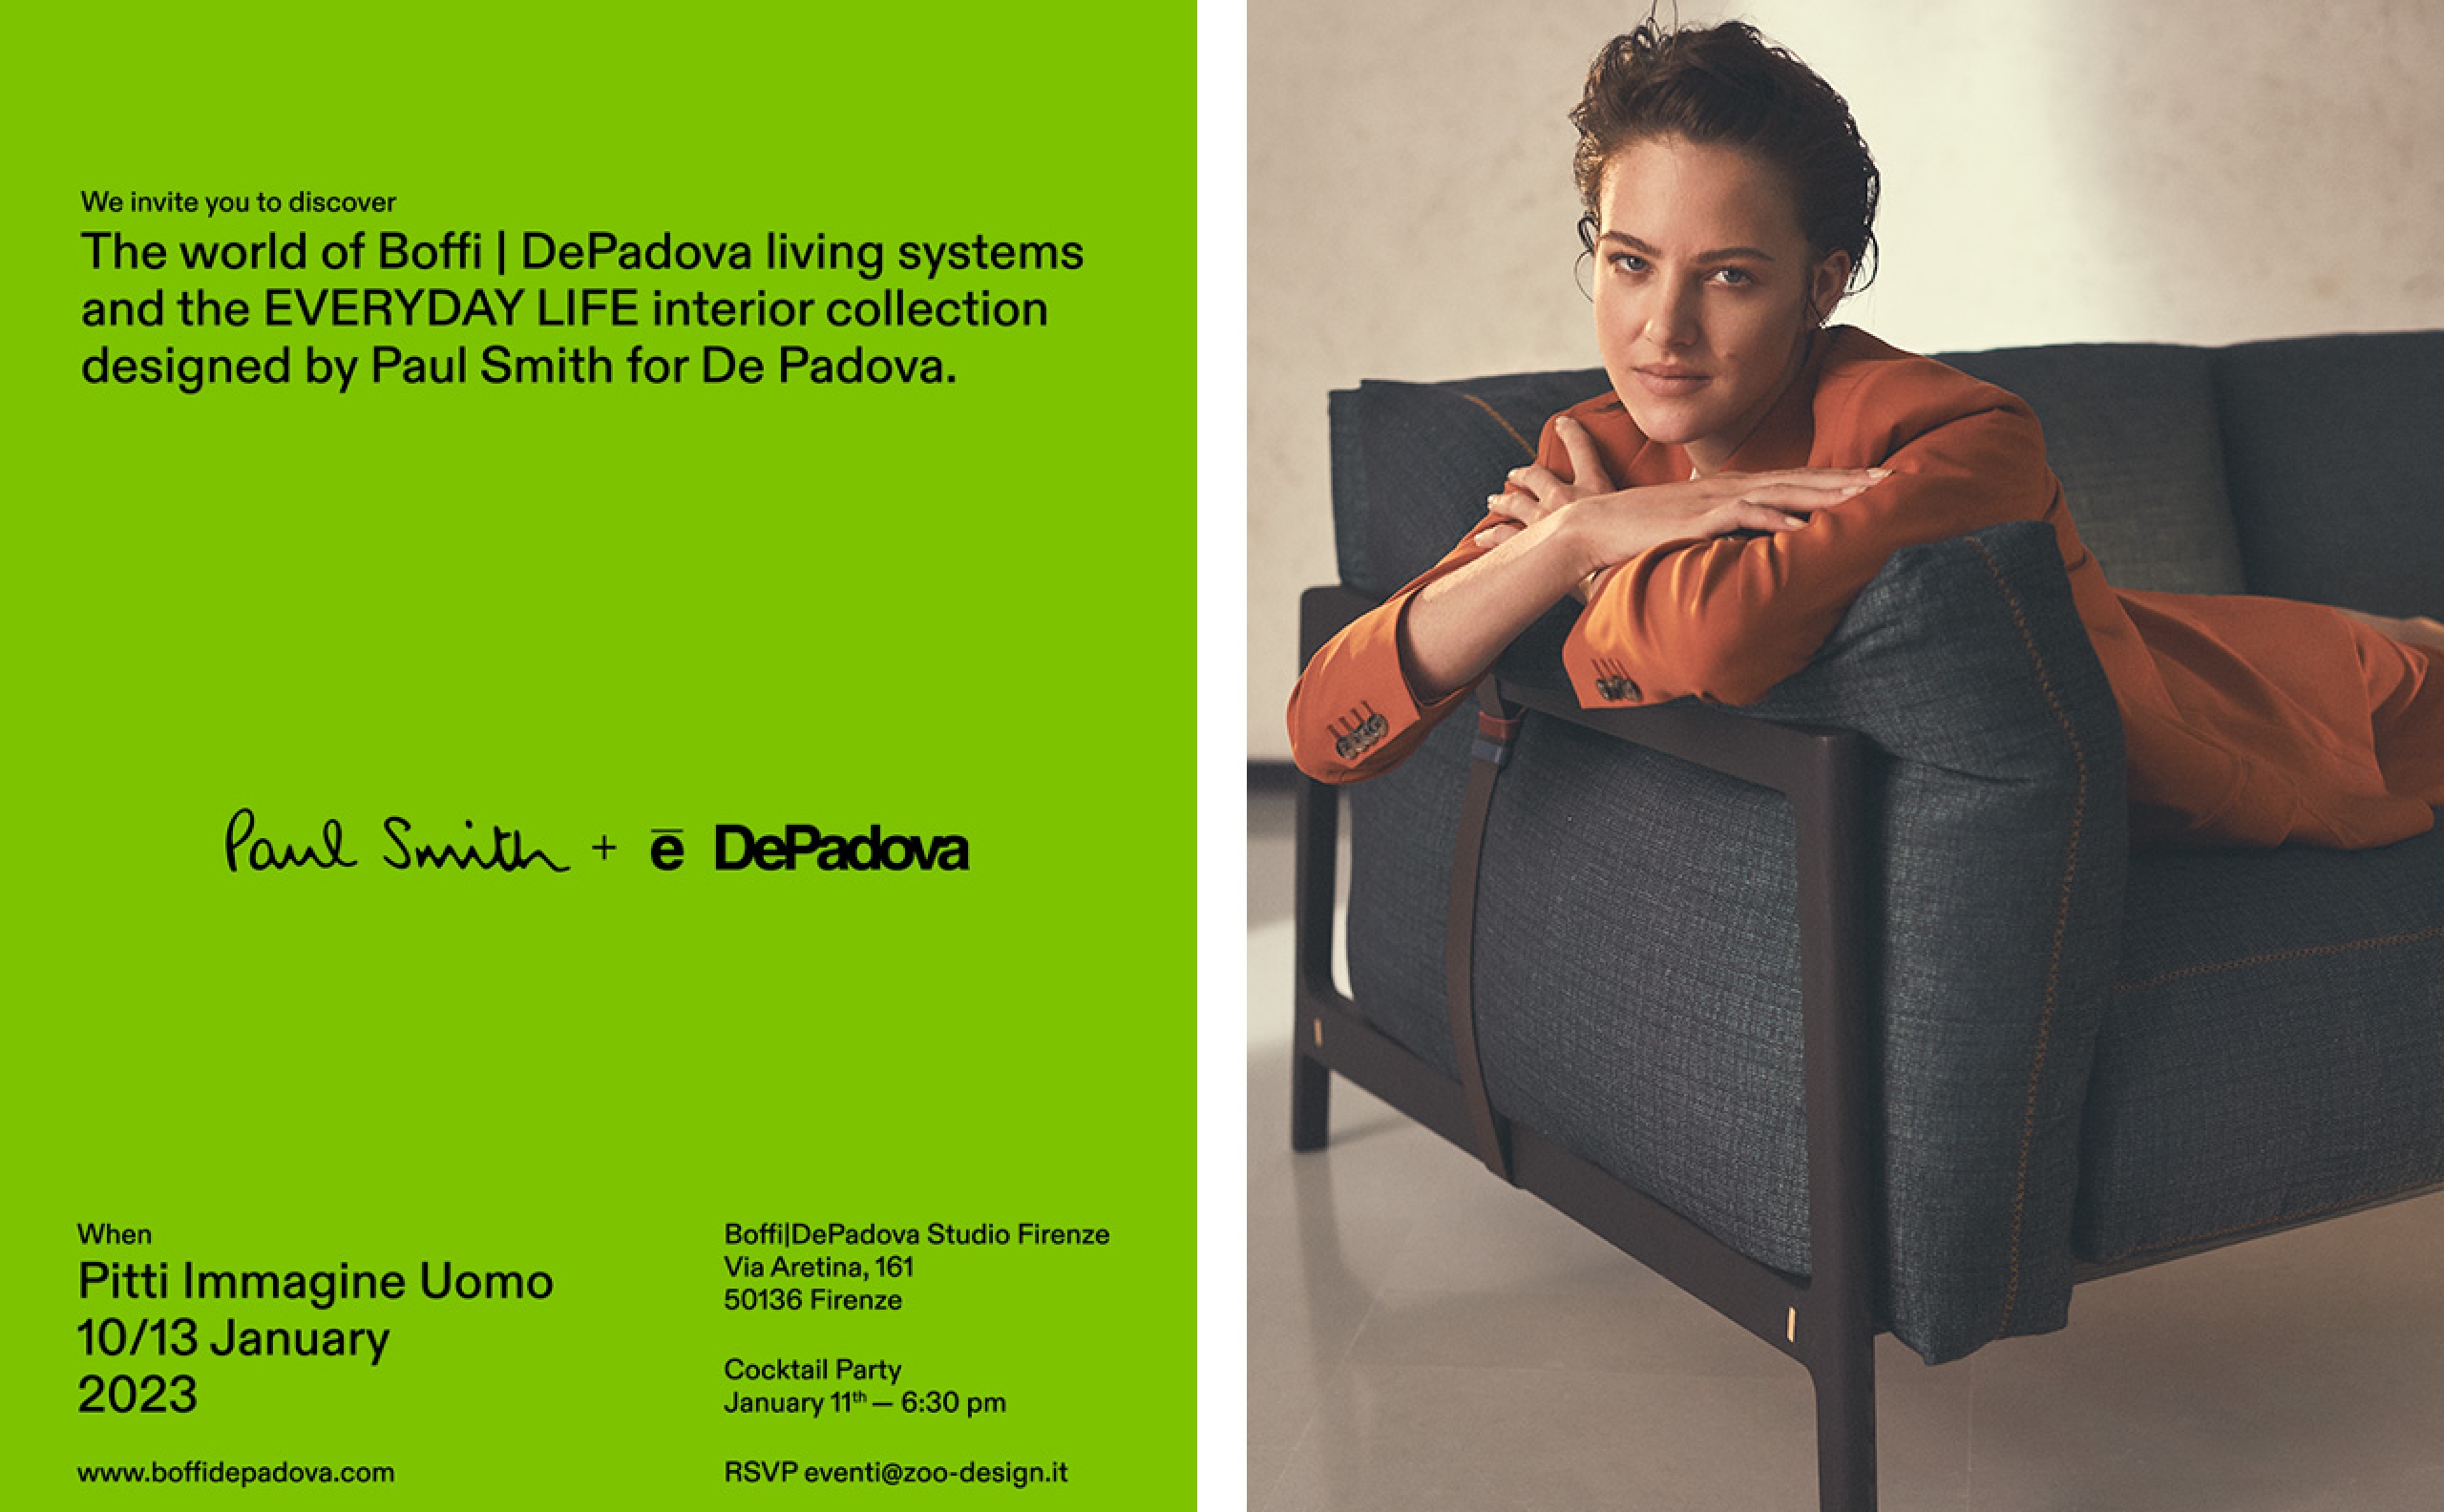 Boffi DePadova News: The EVERYDAY LIFE collection on display at the Boffi|DePadova Studio Firenze 1